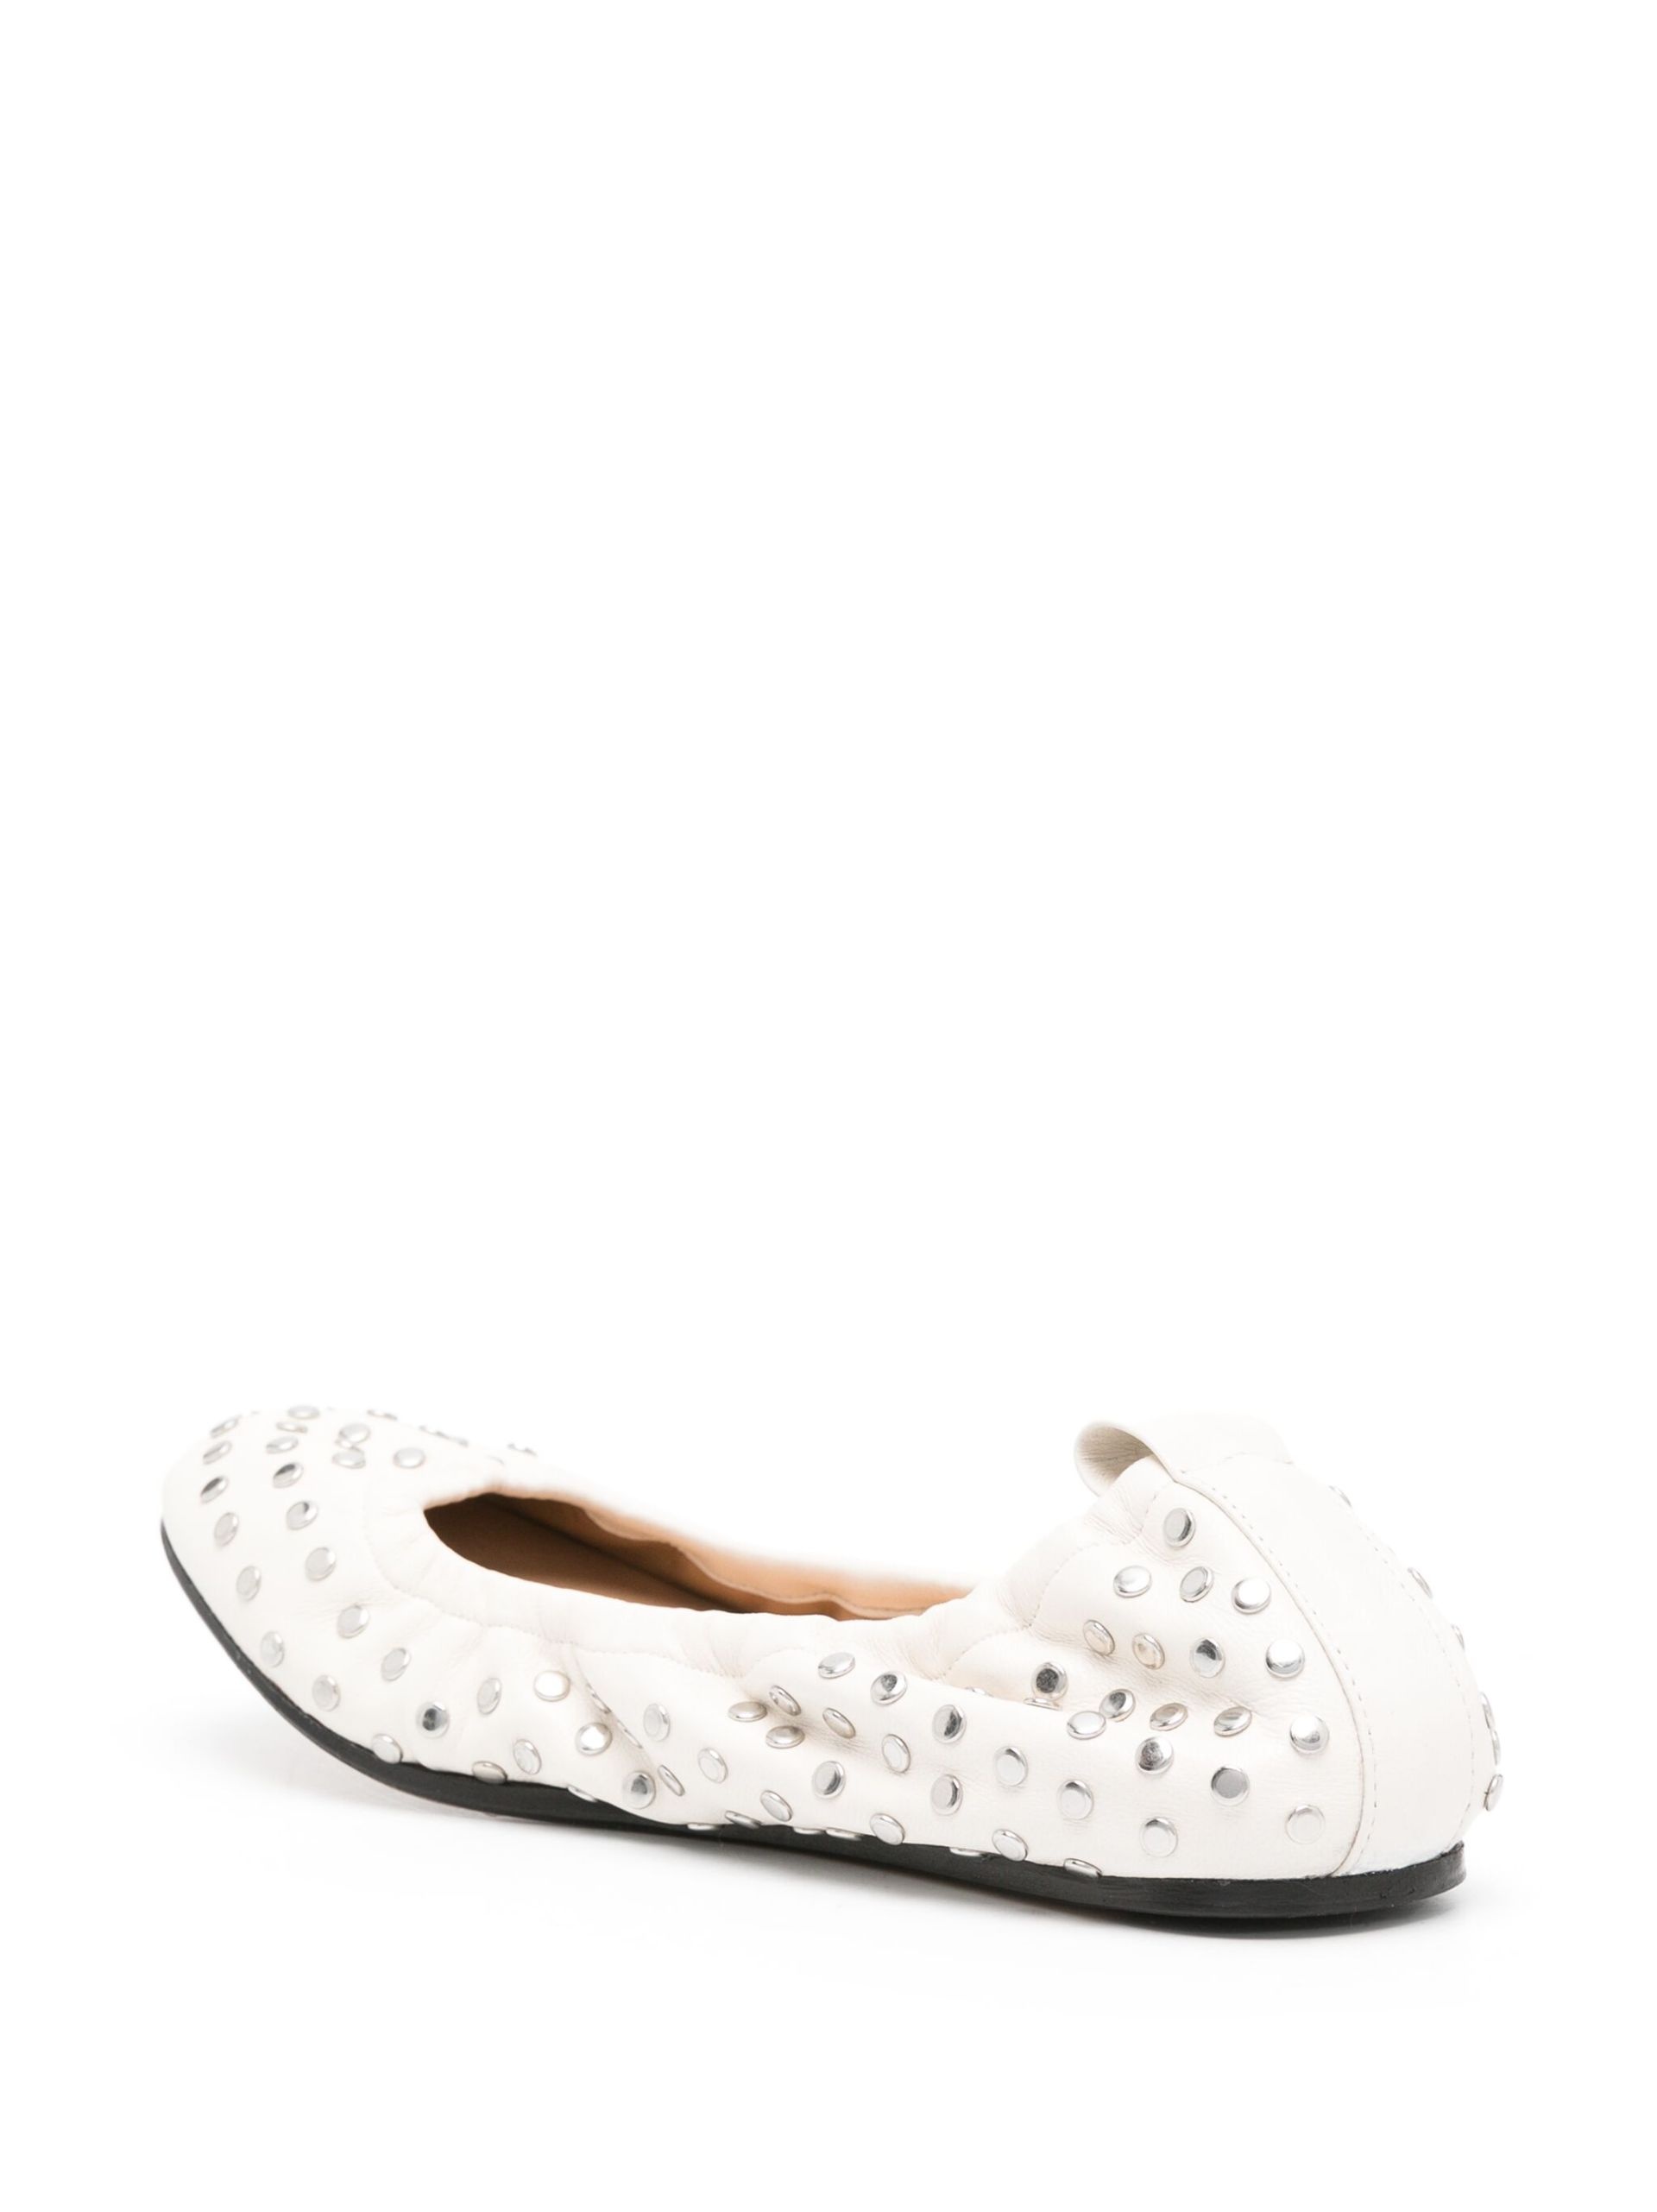 White Stud-Embellished Leather Ballerina Shoes - 3